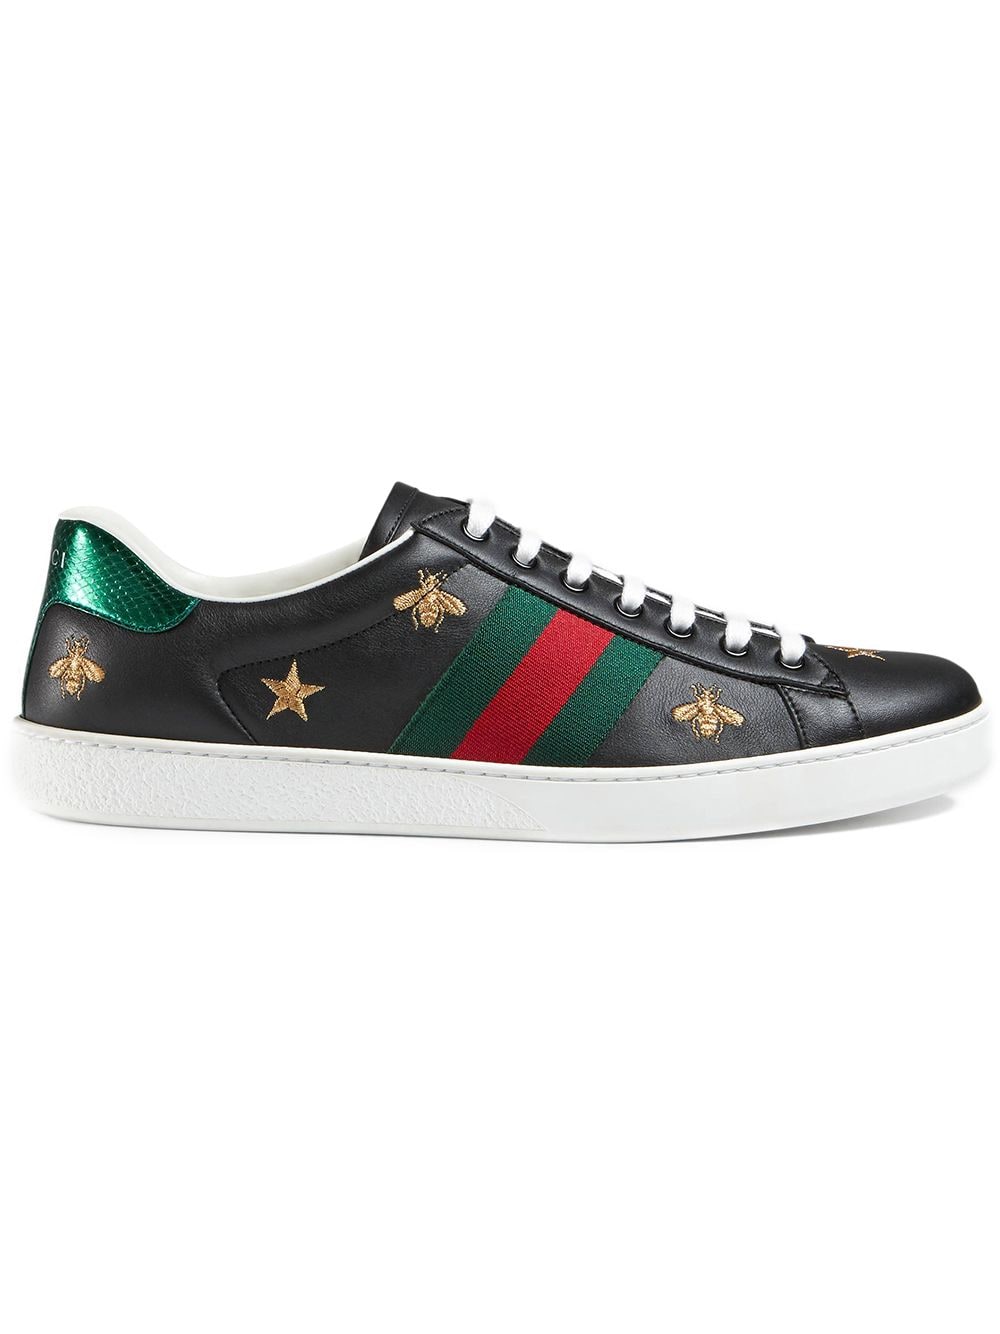 Gucci Ace Embroidered Sneaker - Farfetch